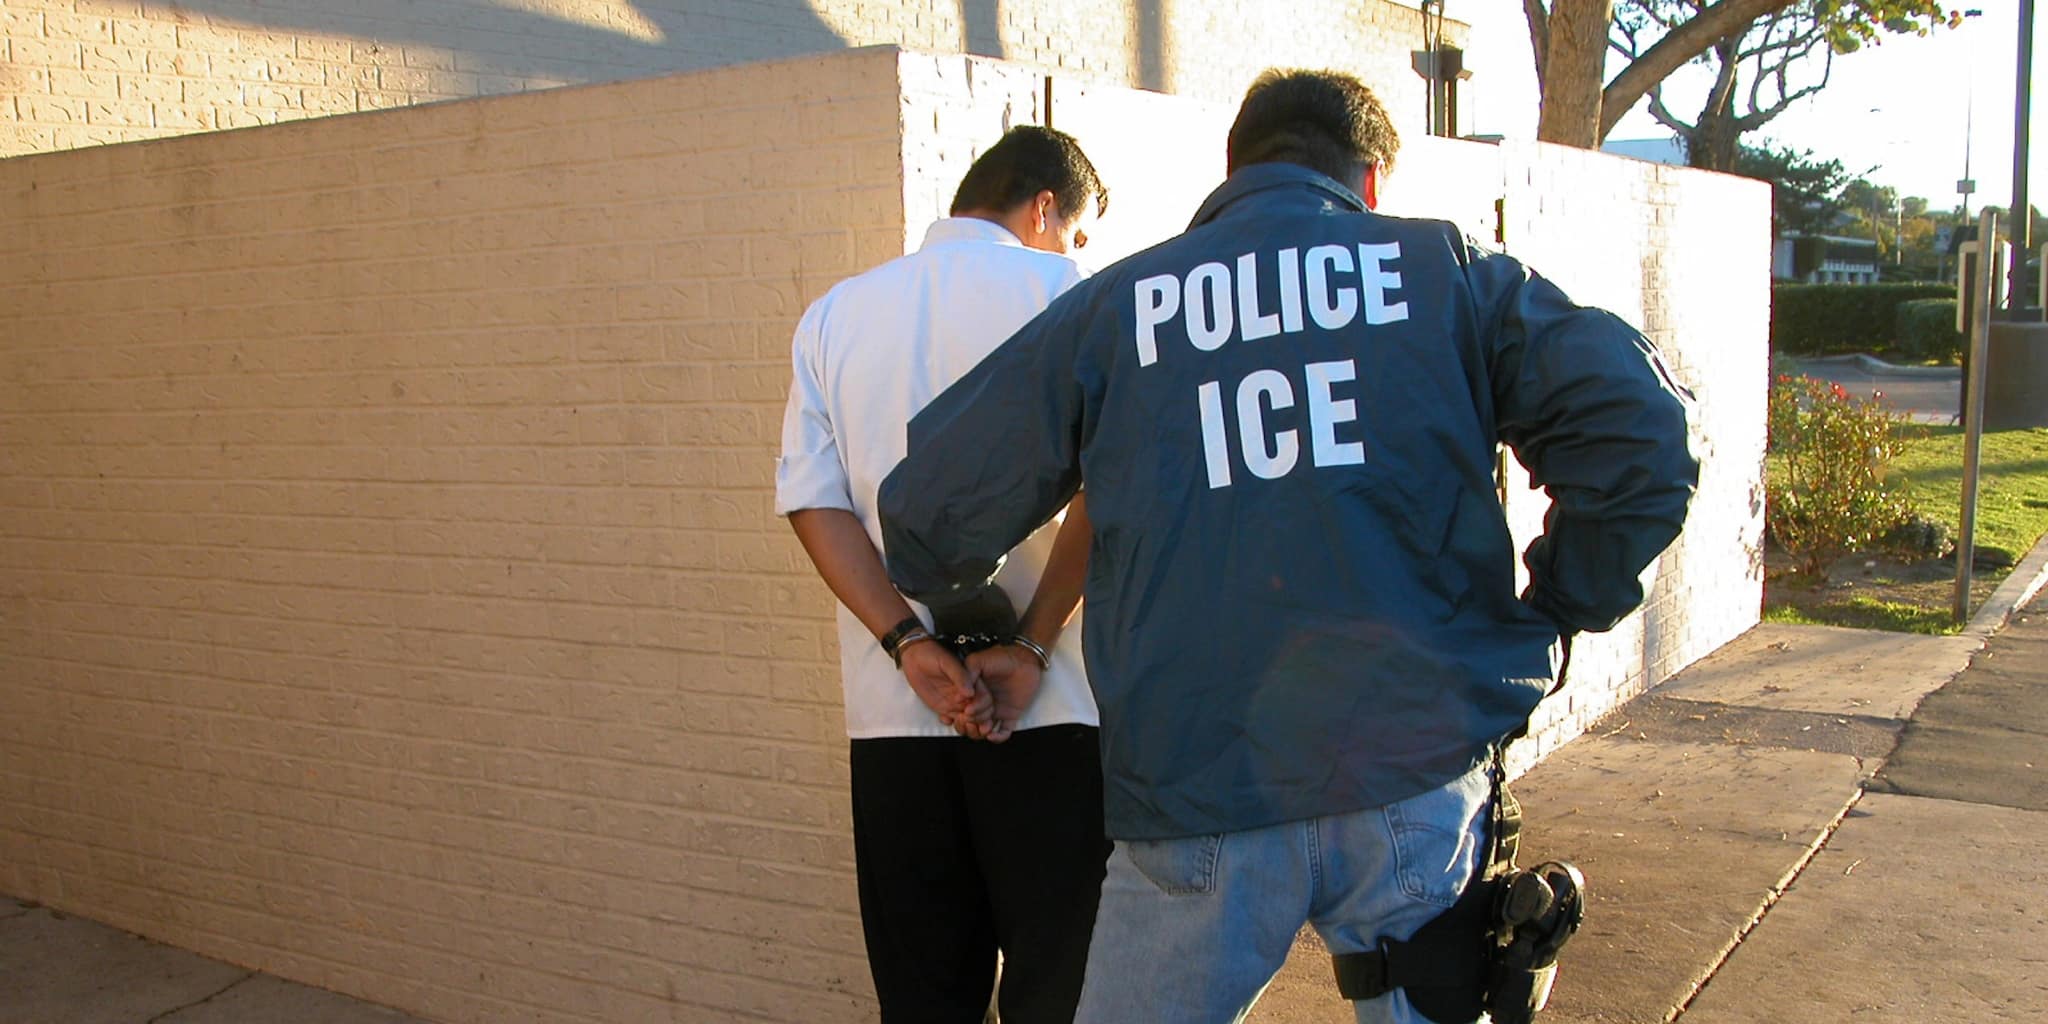 police-ice-trump-immigration-photocredit-dailydot-com